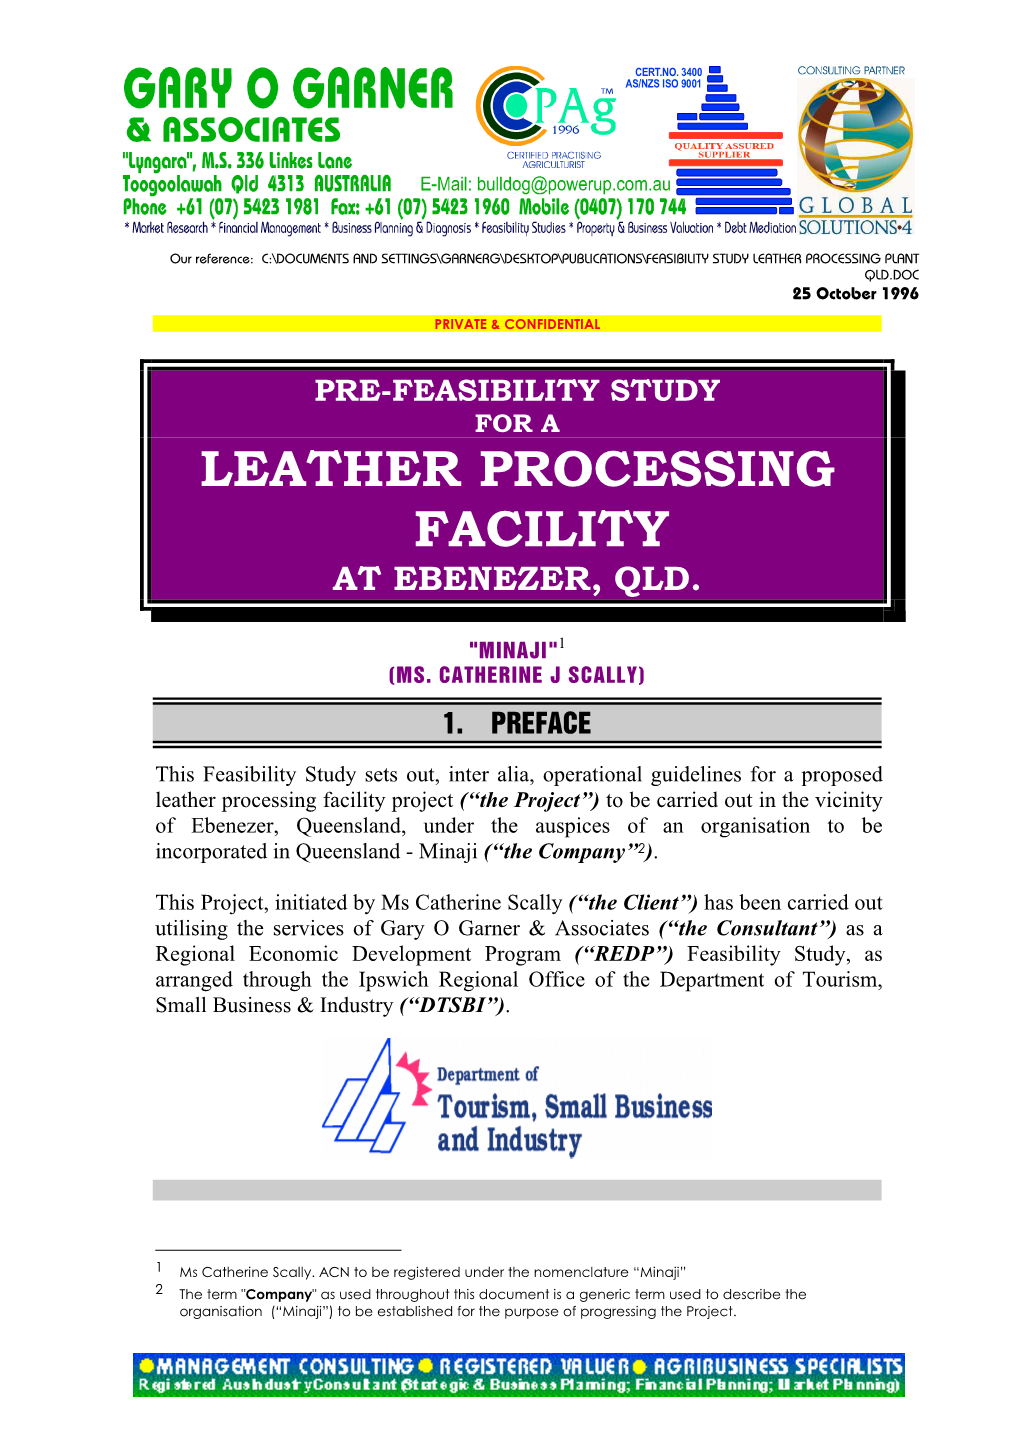 Leather Processing Facility at Ebenezer, Qld